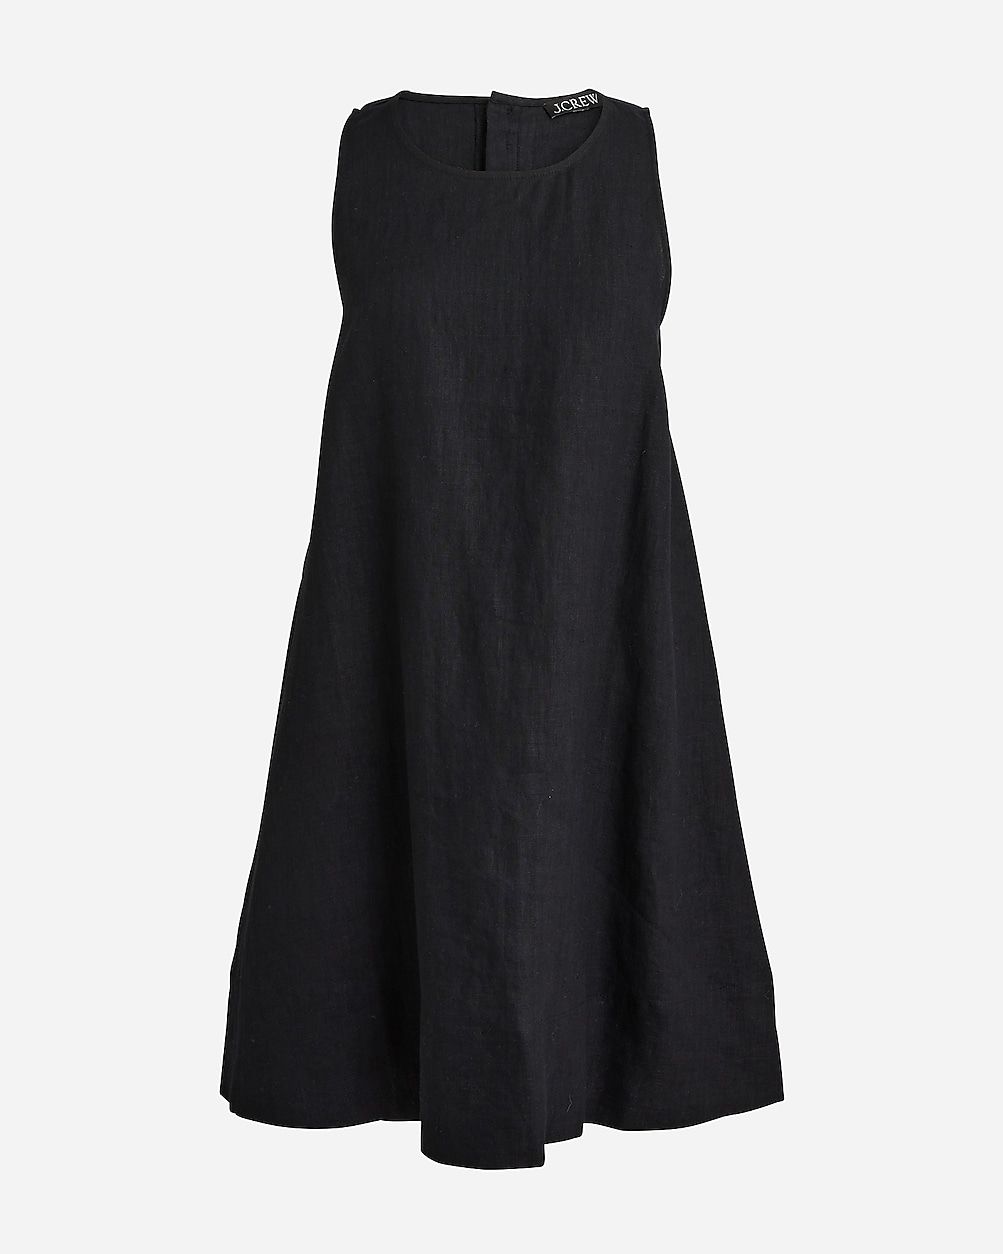 Shop this lookbest seller3.6(25 REVIEWS)Maxine button-back dress in linen$98.00BlackClassicPetite... | J.Crew US